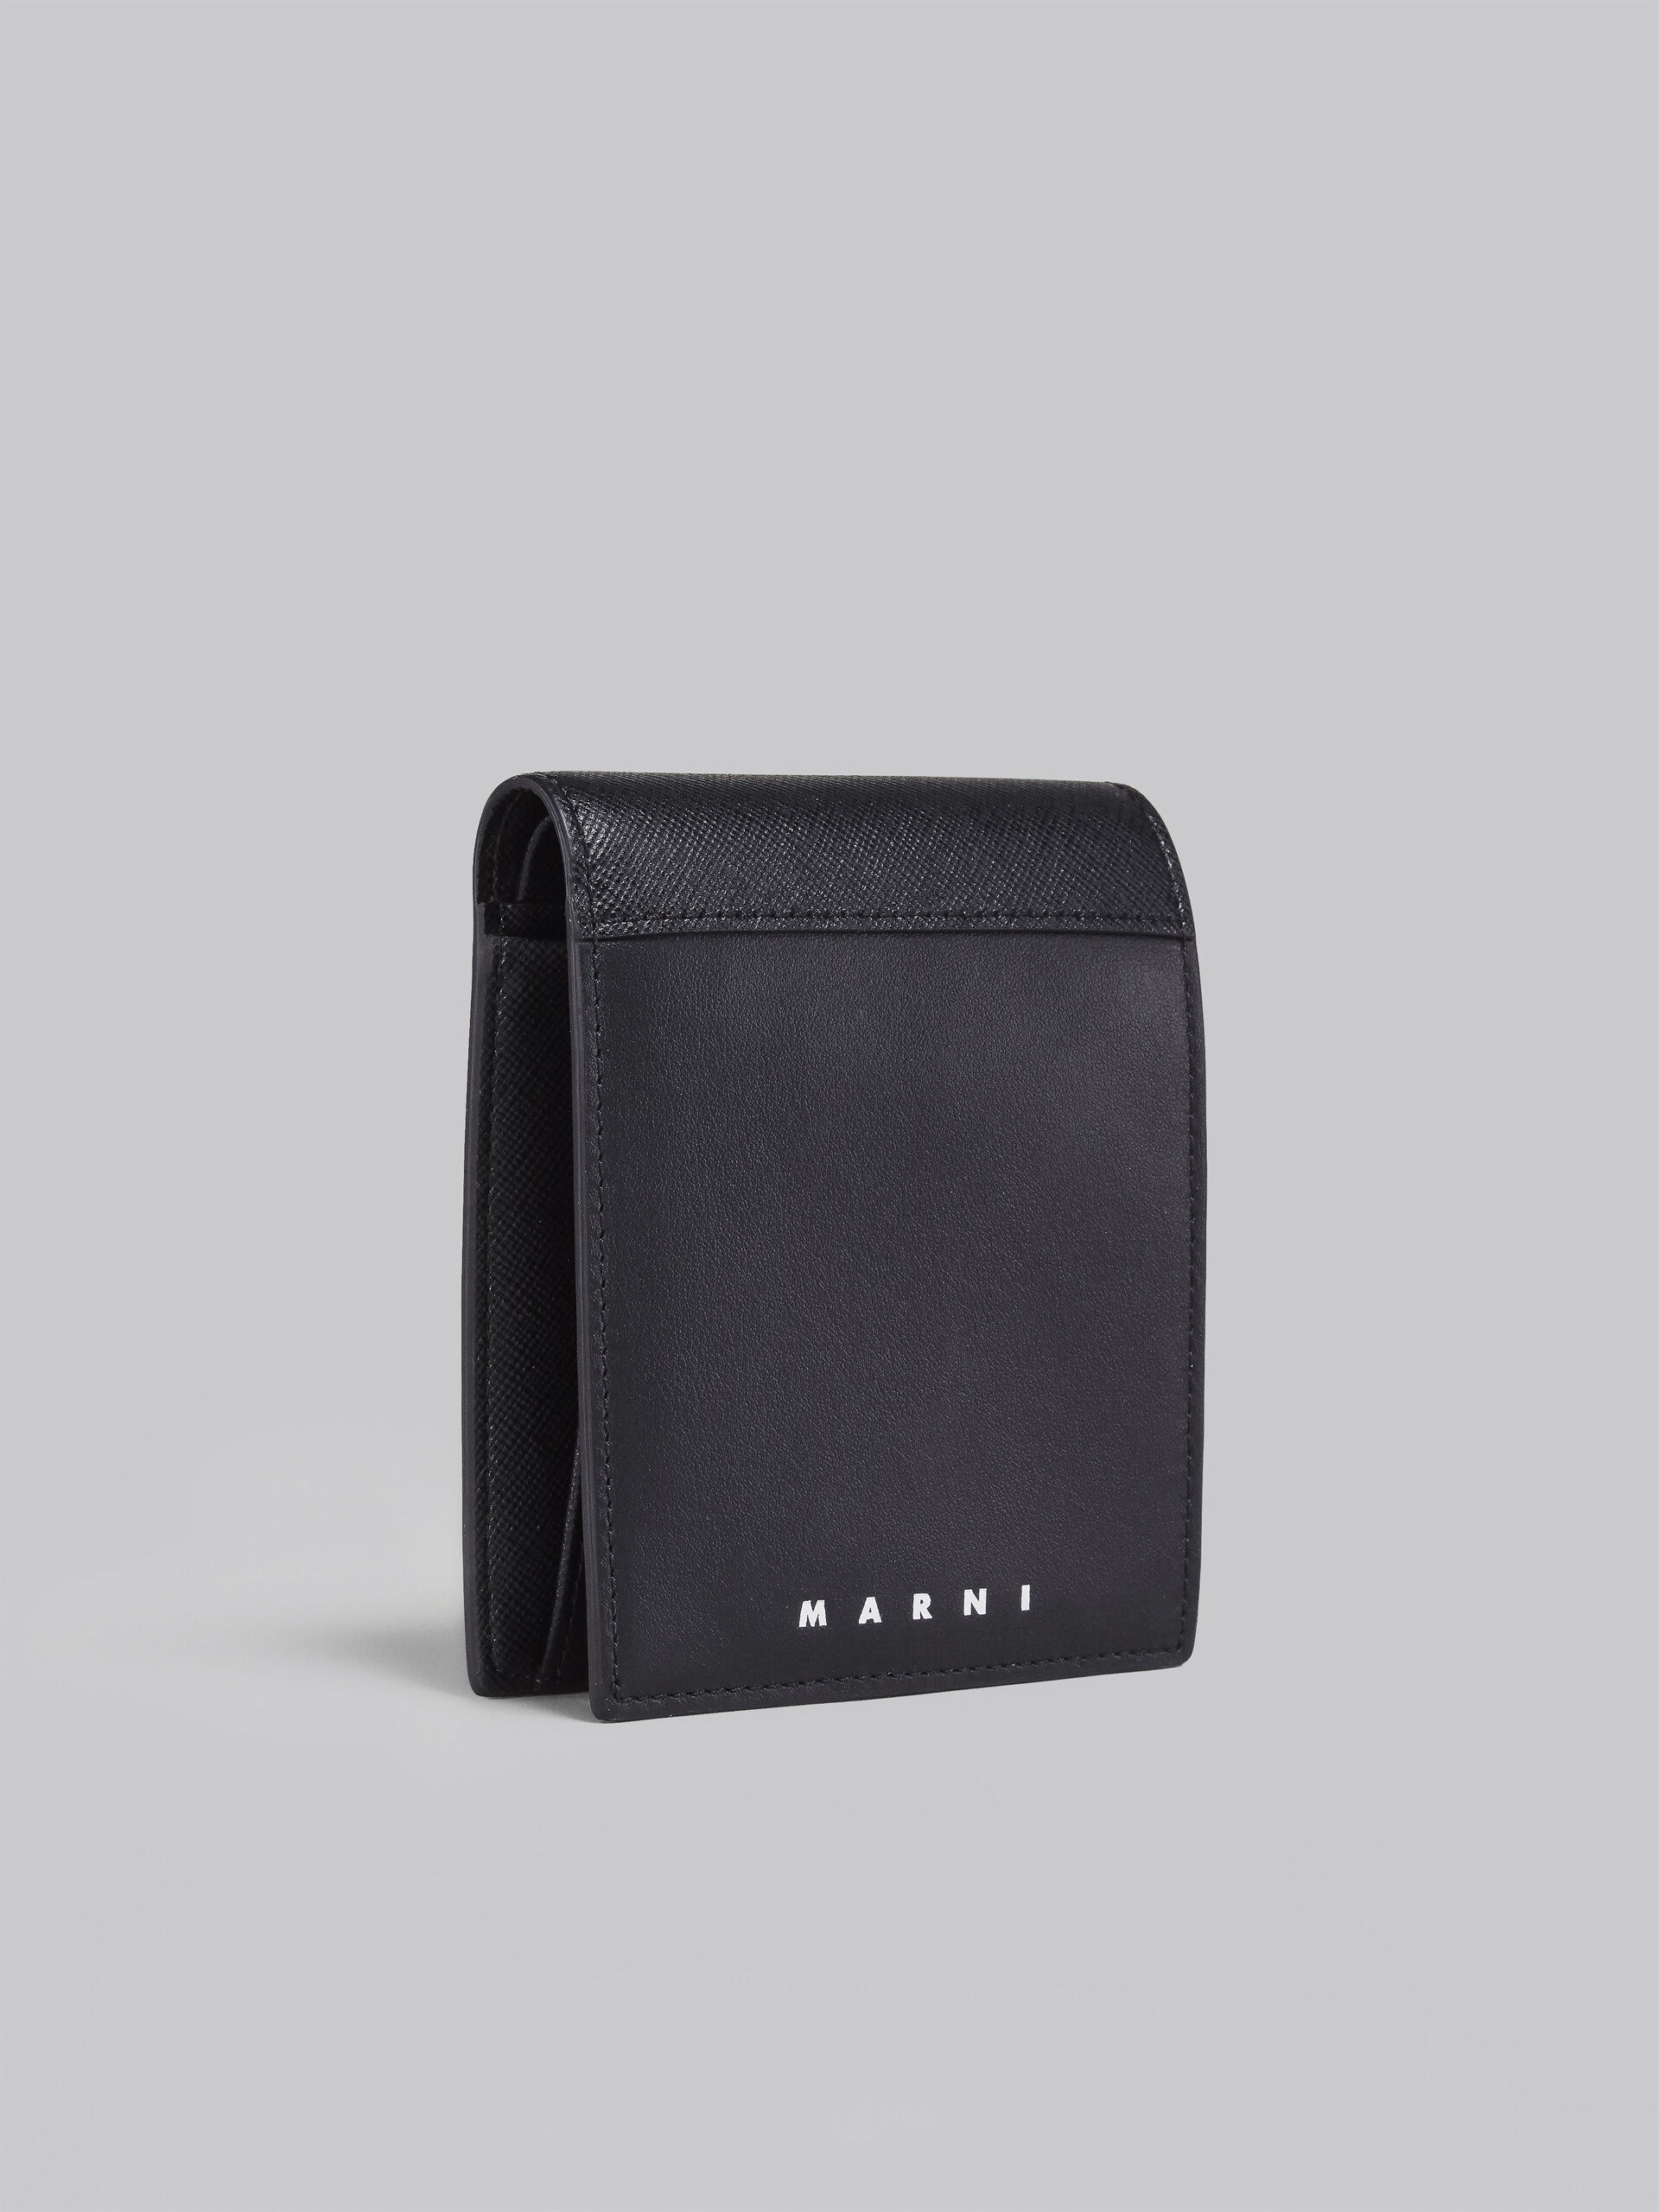 Marni Black Leather Bifold Wallet